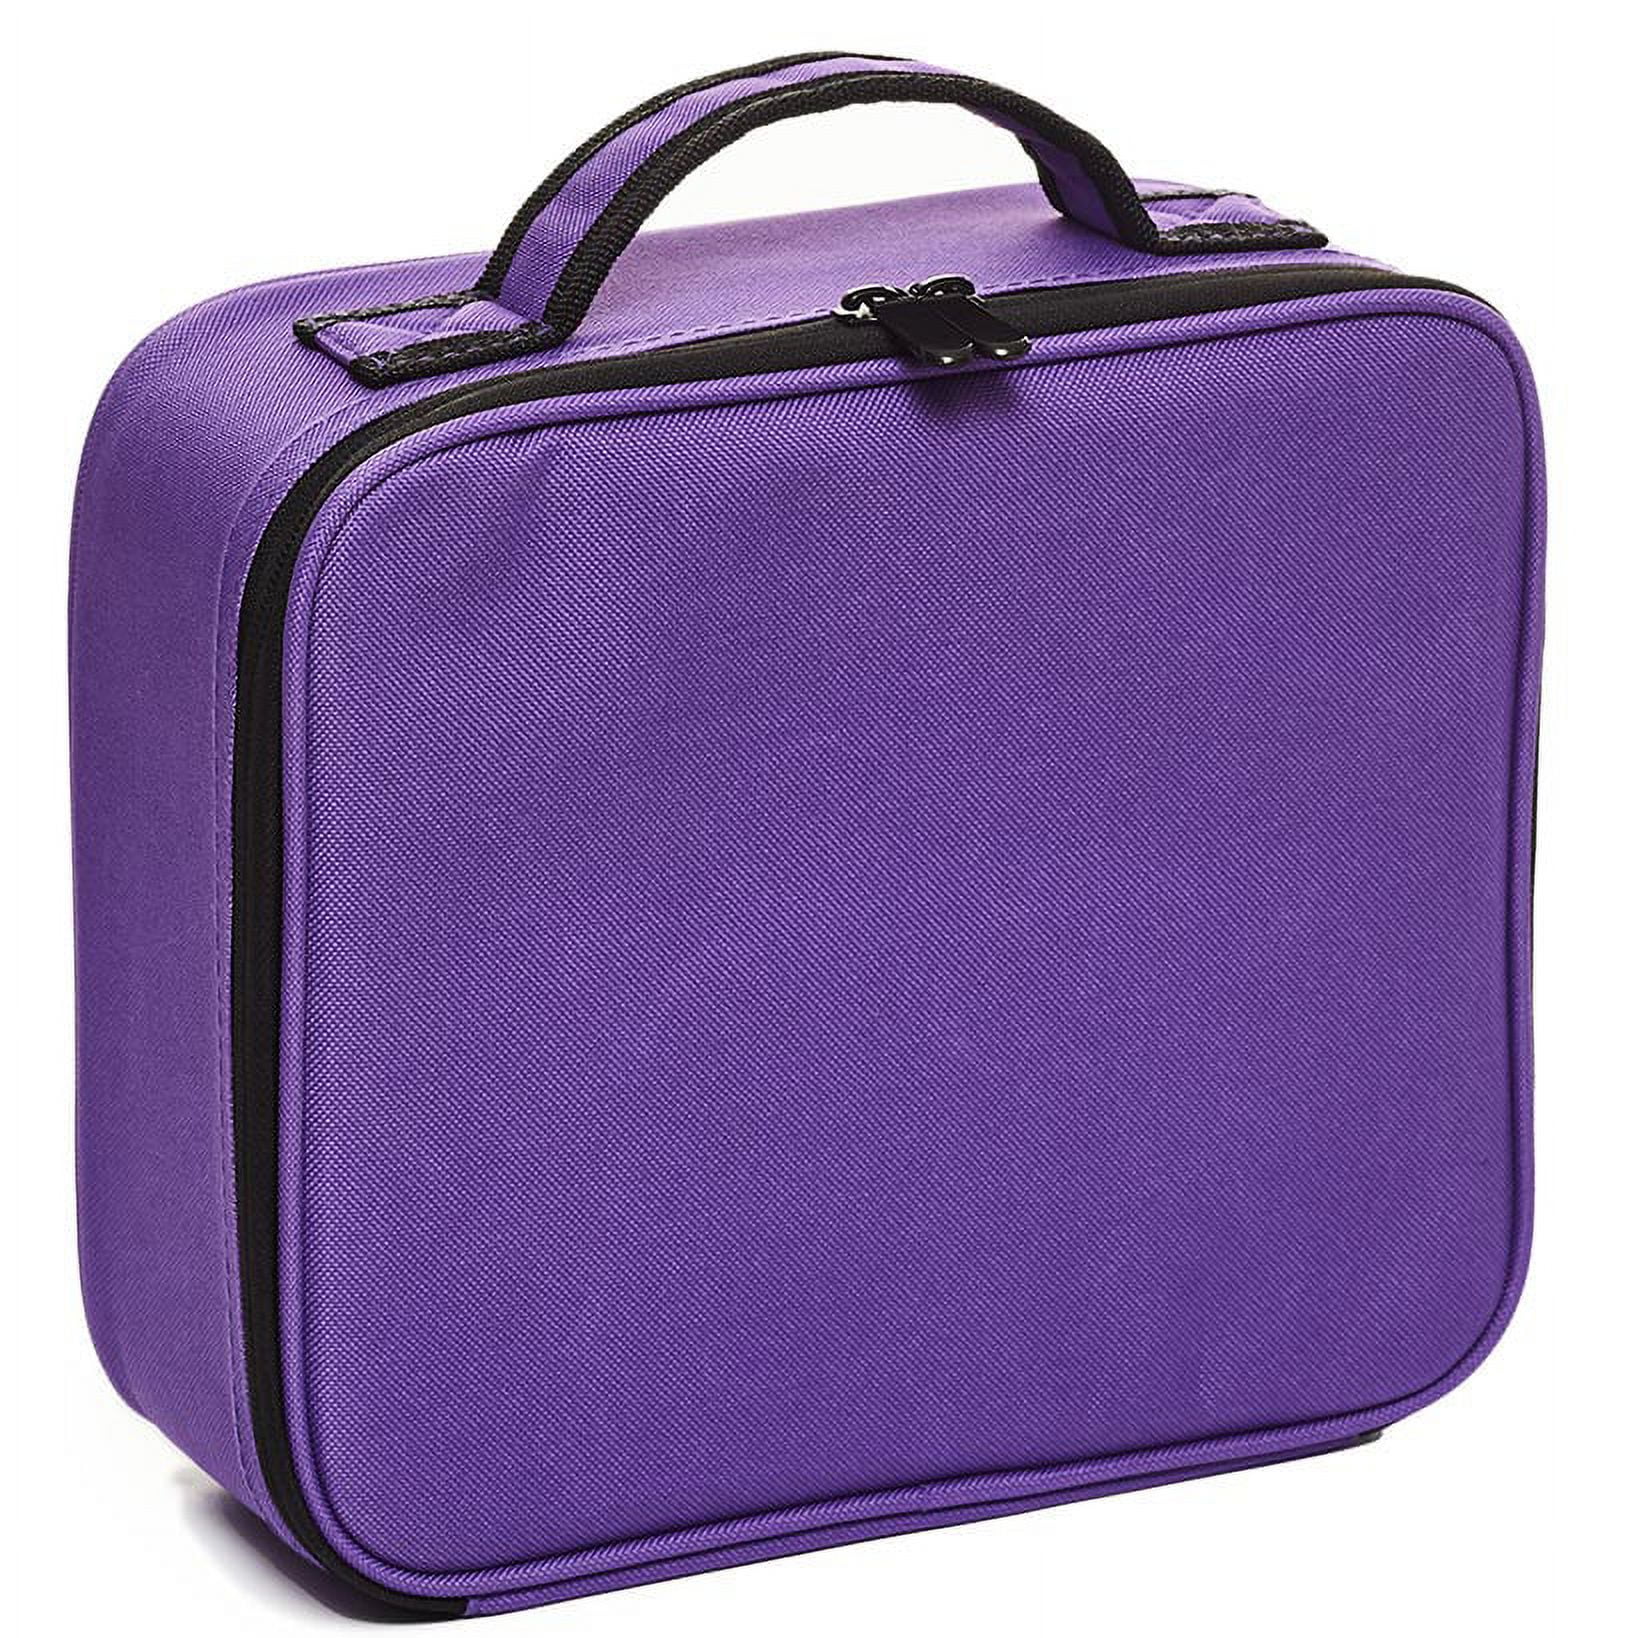 Makeup Organizer Case with Adjustable Dividers - Travel Bag - Purple